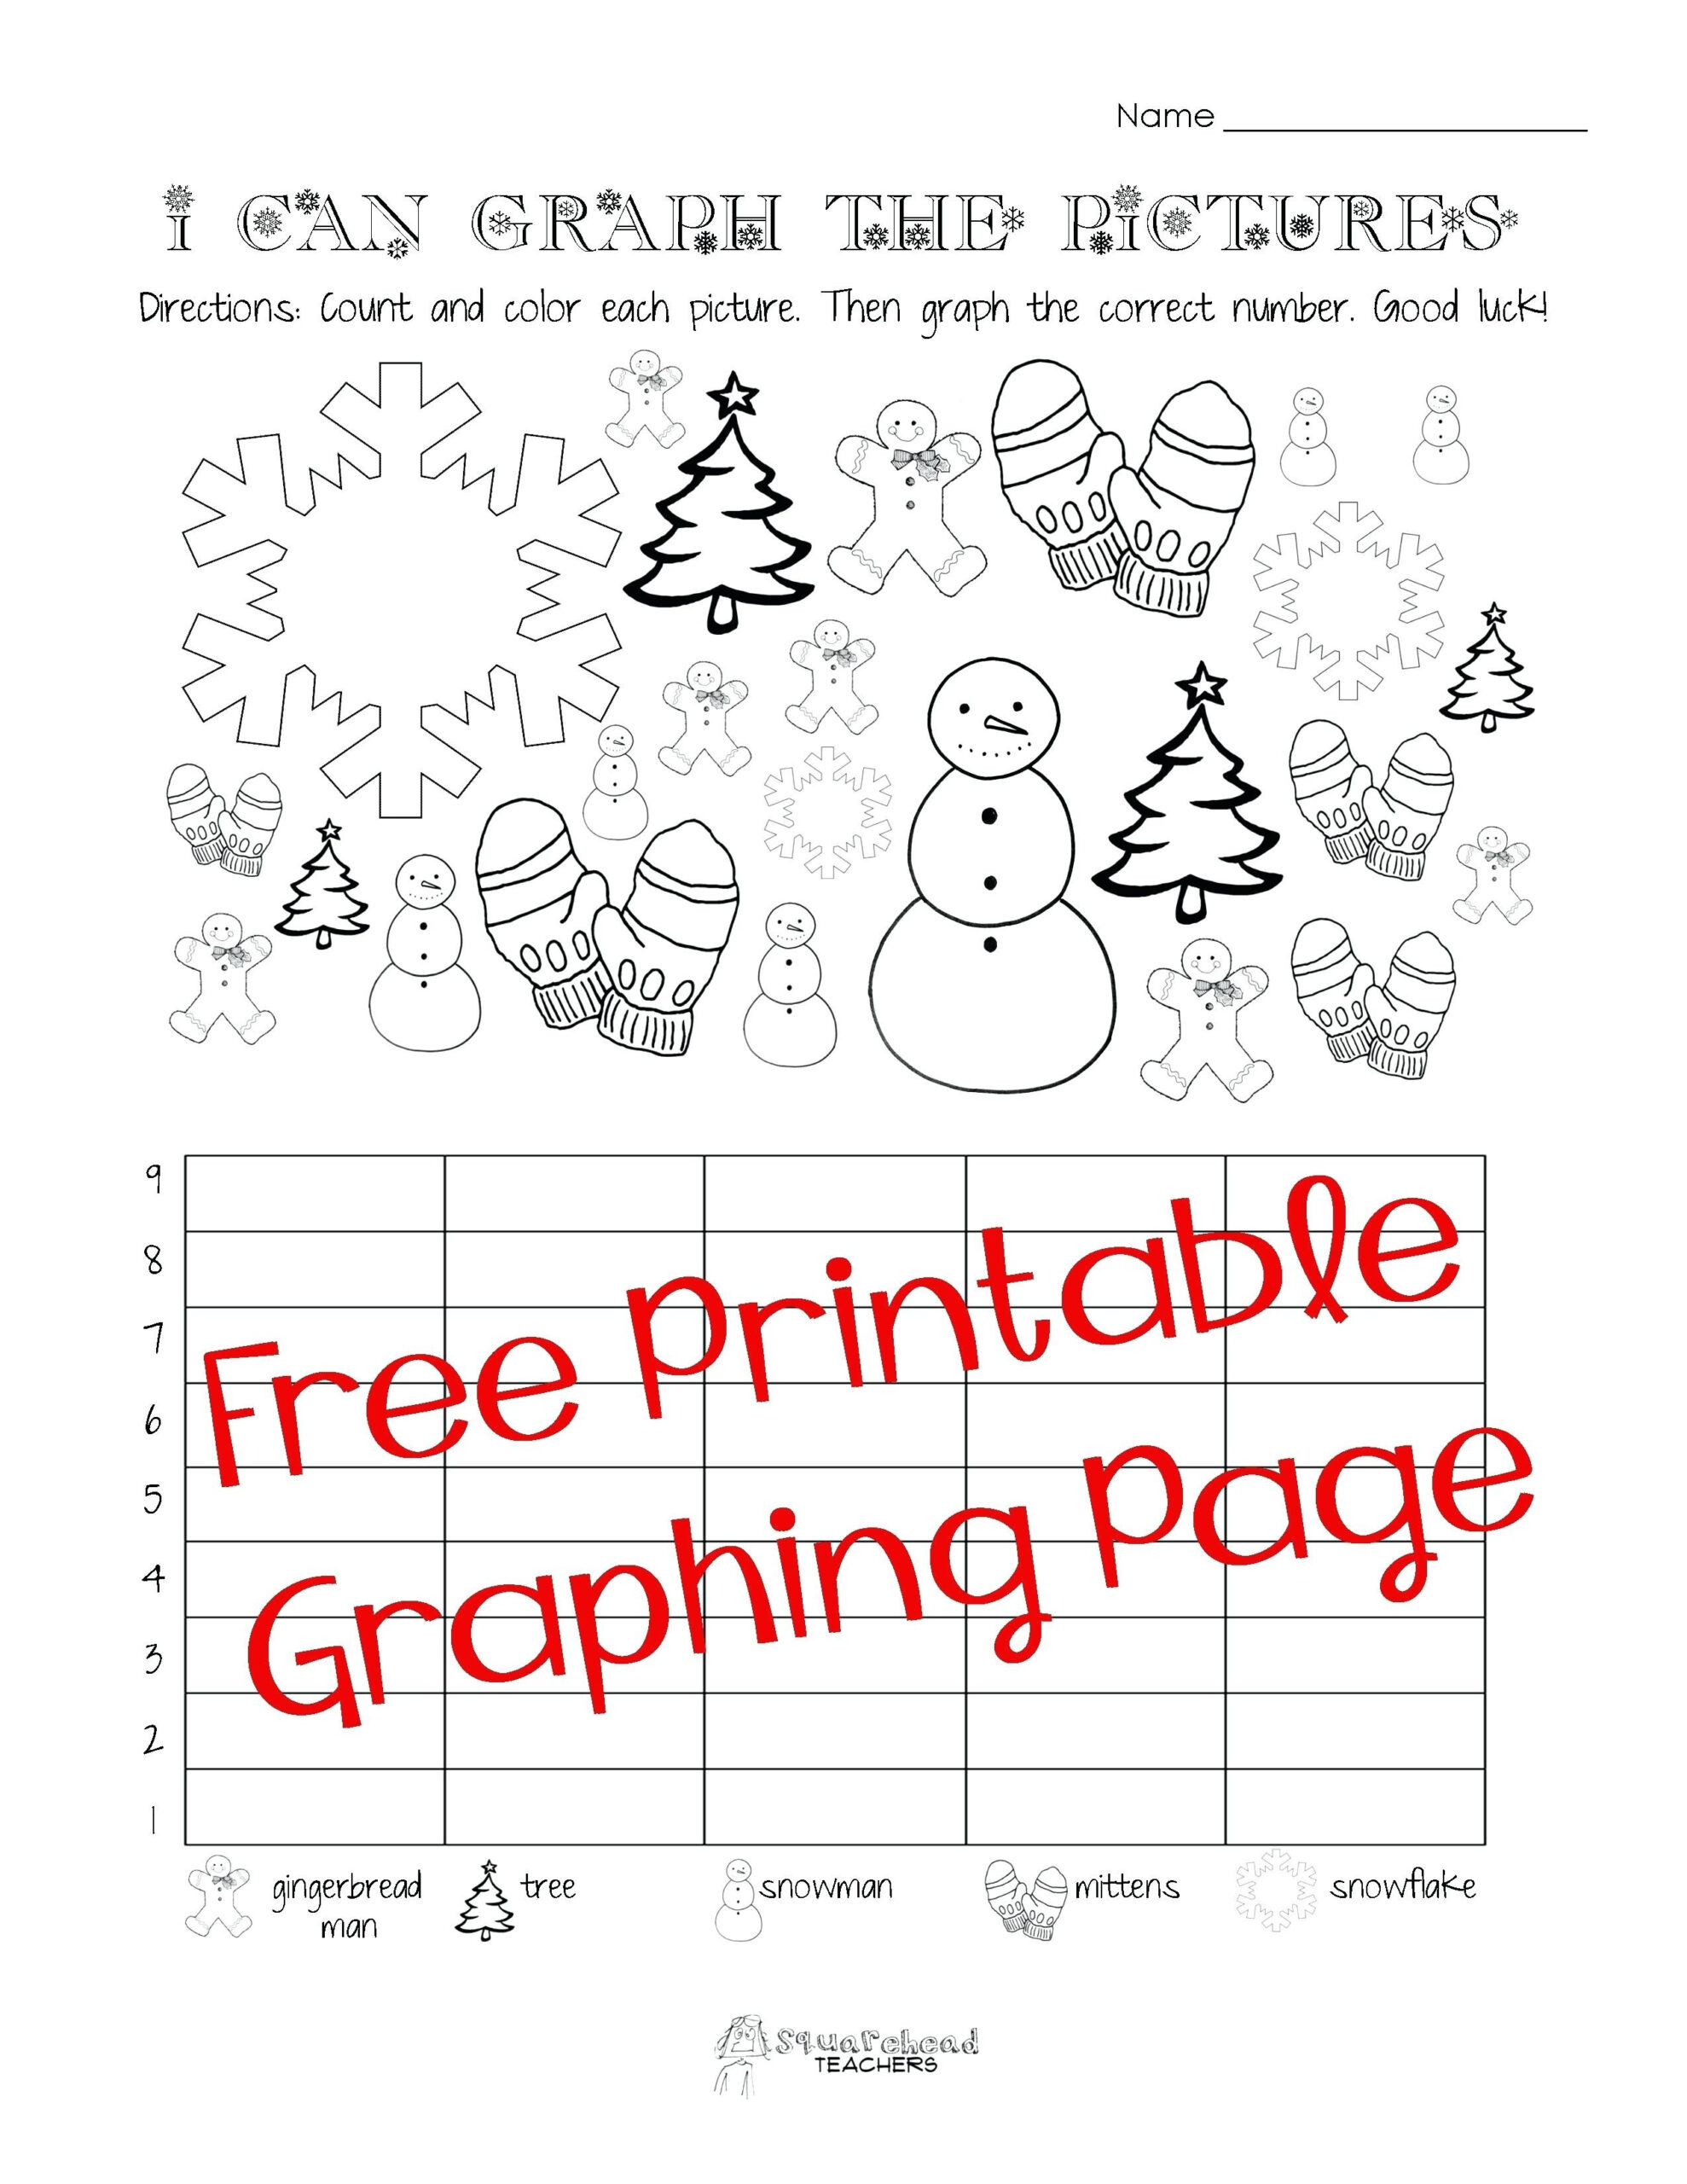 Free Printable Language Arts Worksheets For 1St Grade Free Printable